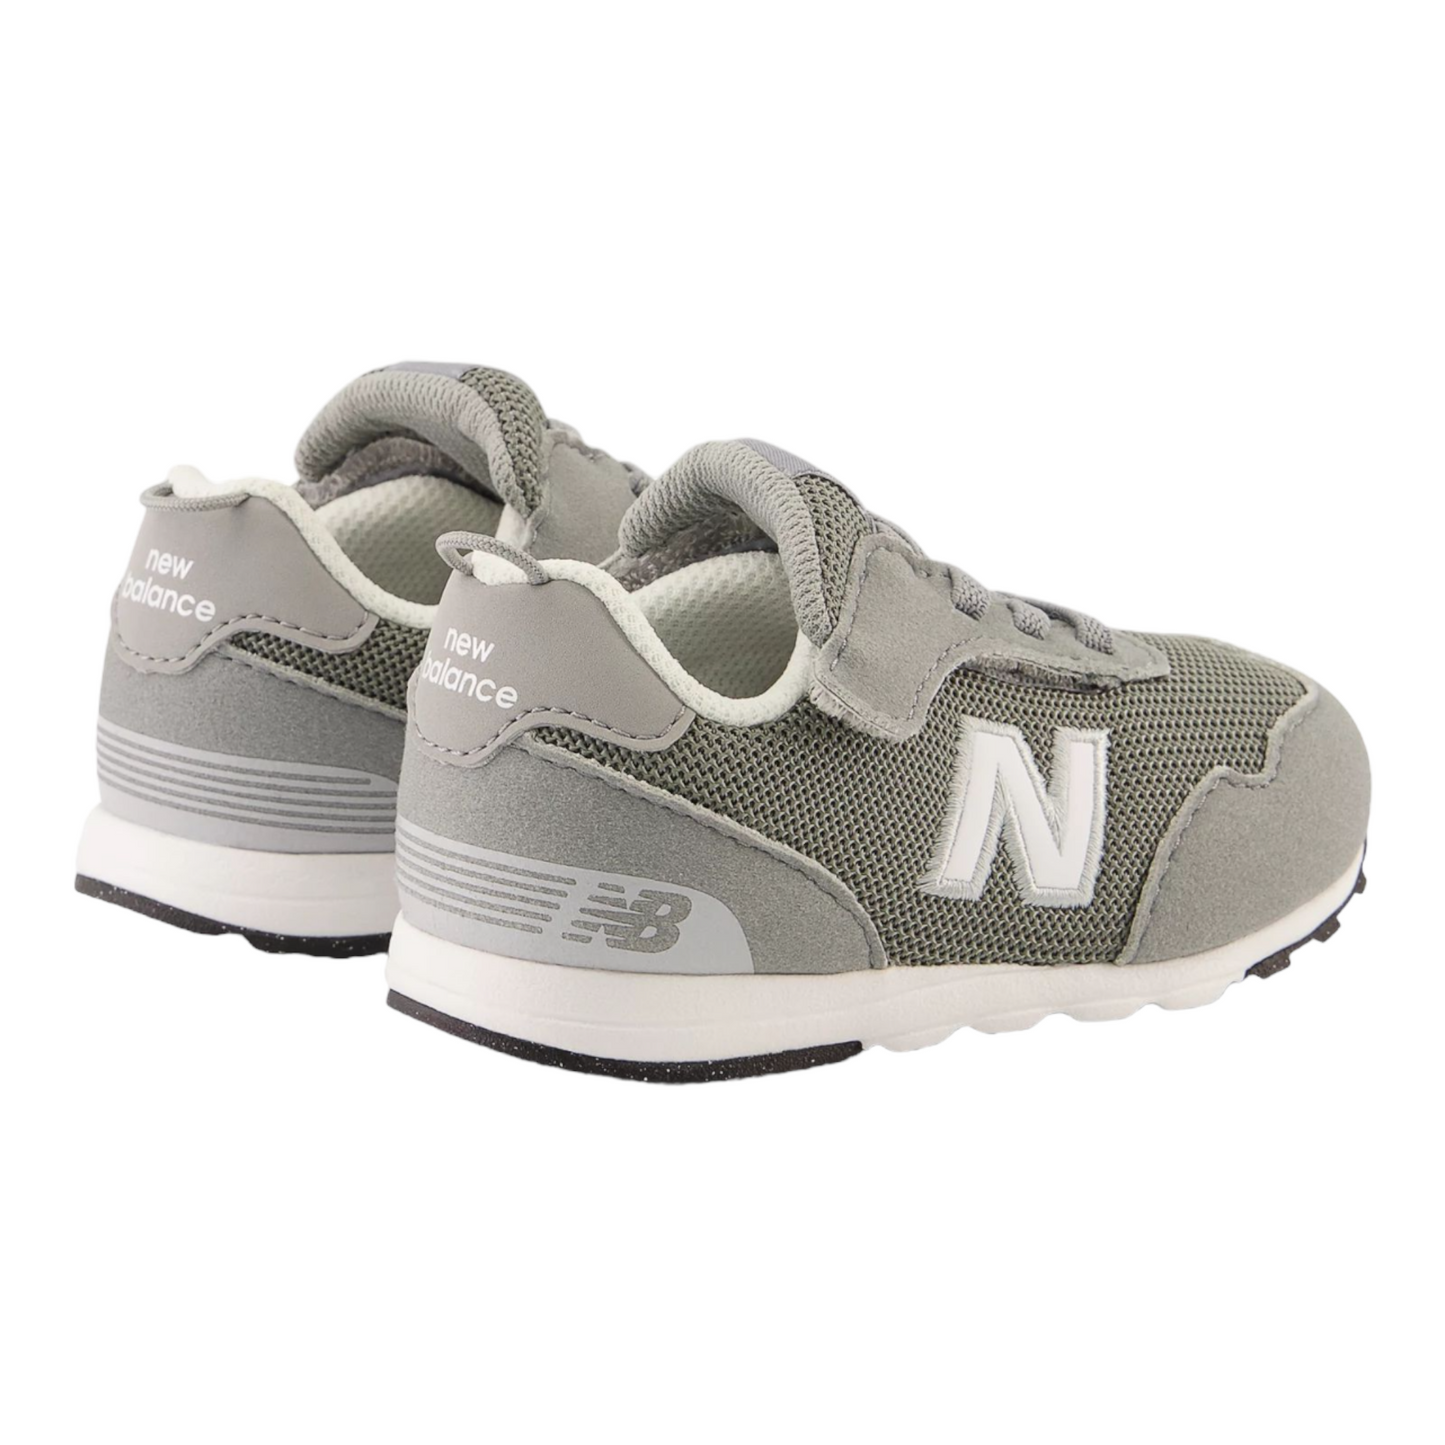 New Balance 515 Velcro Classic Sneaker- Toddler